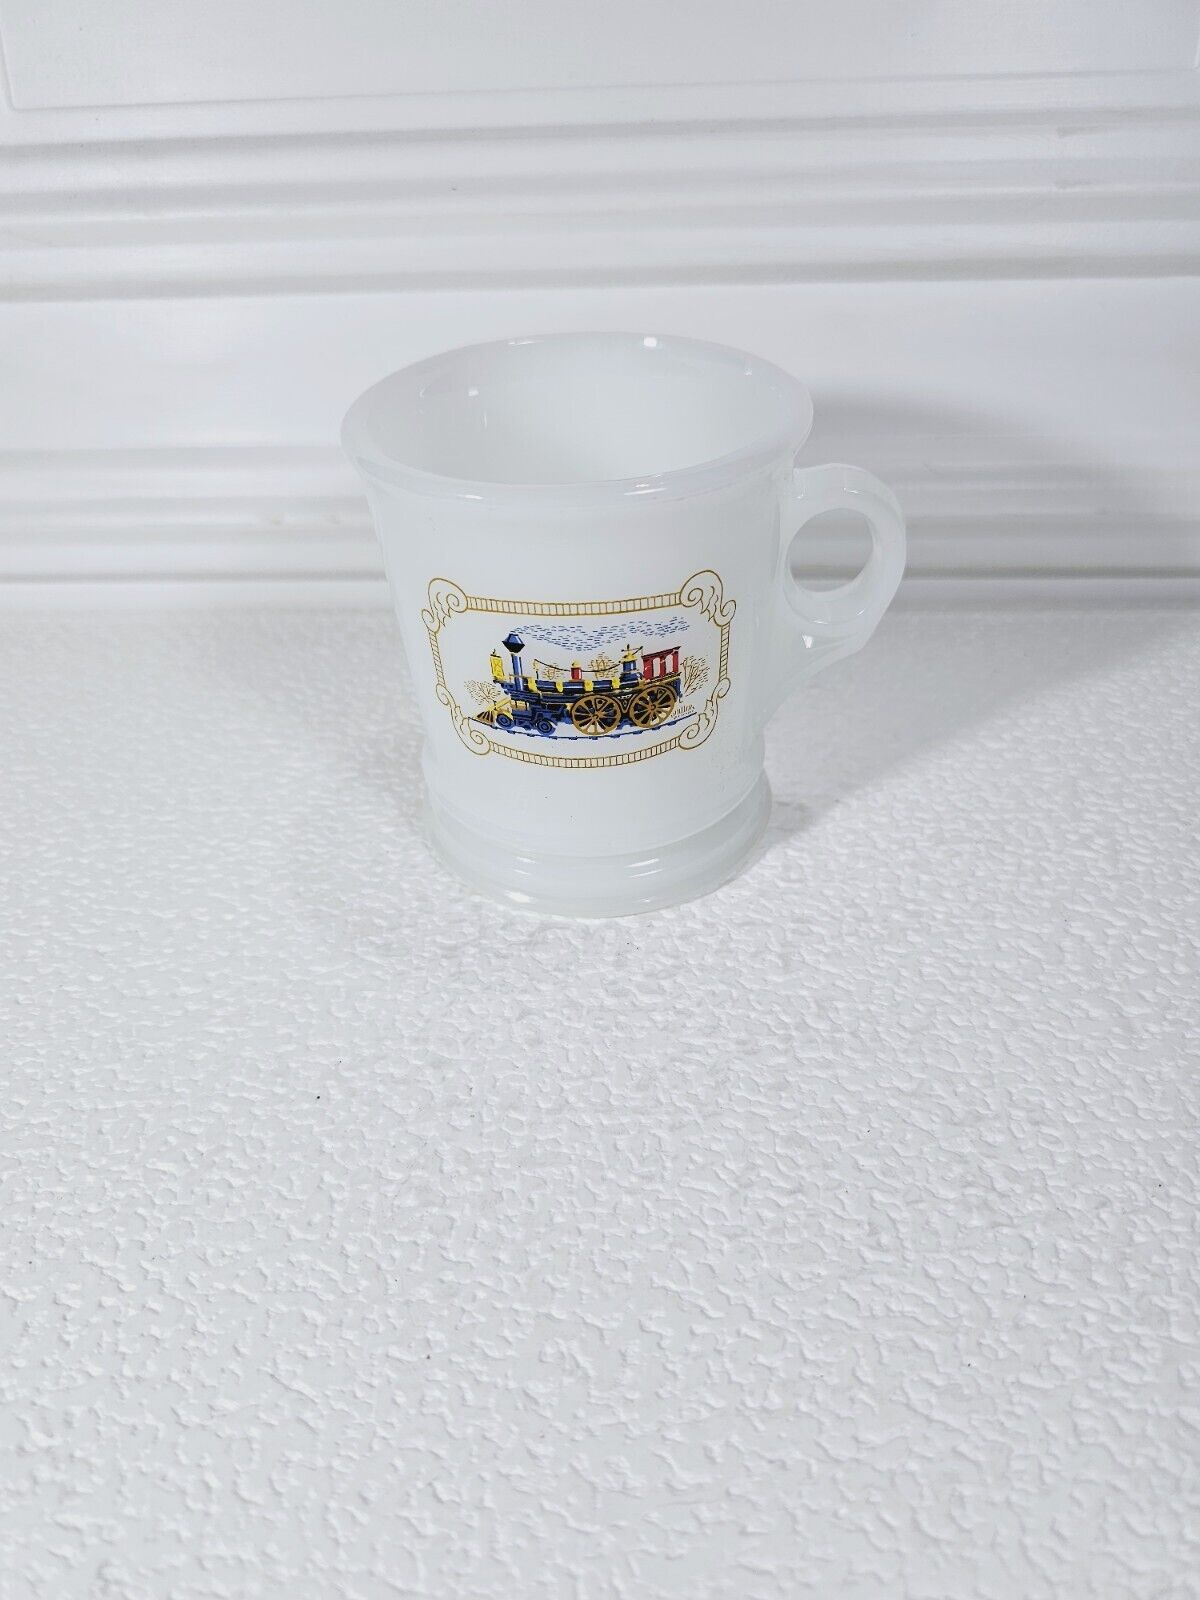 Vintage Avon Milk Glass Mug Cup with Antique Locomotive Lionel Train 